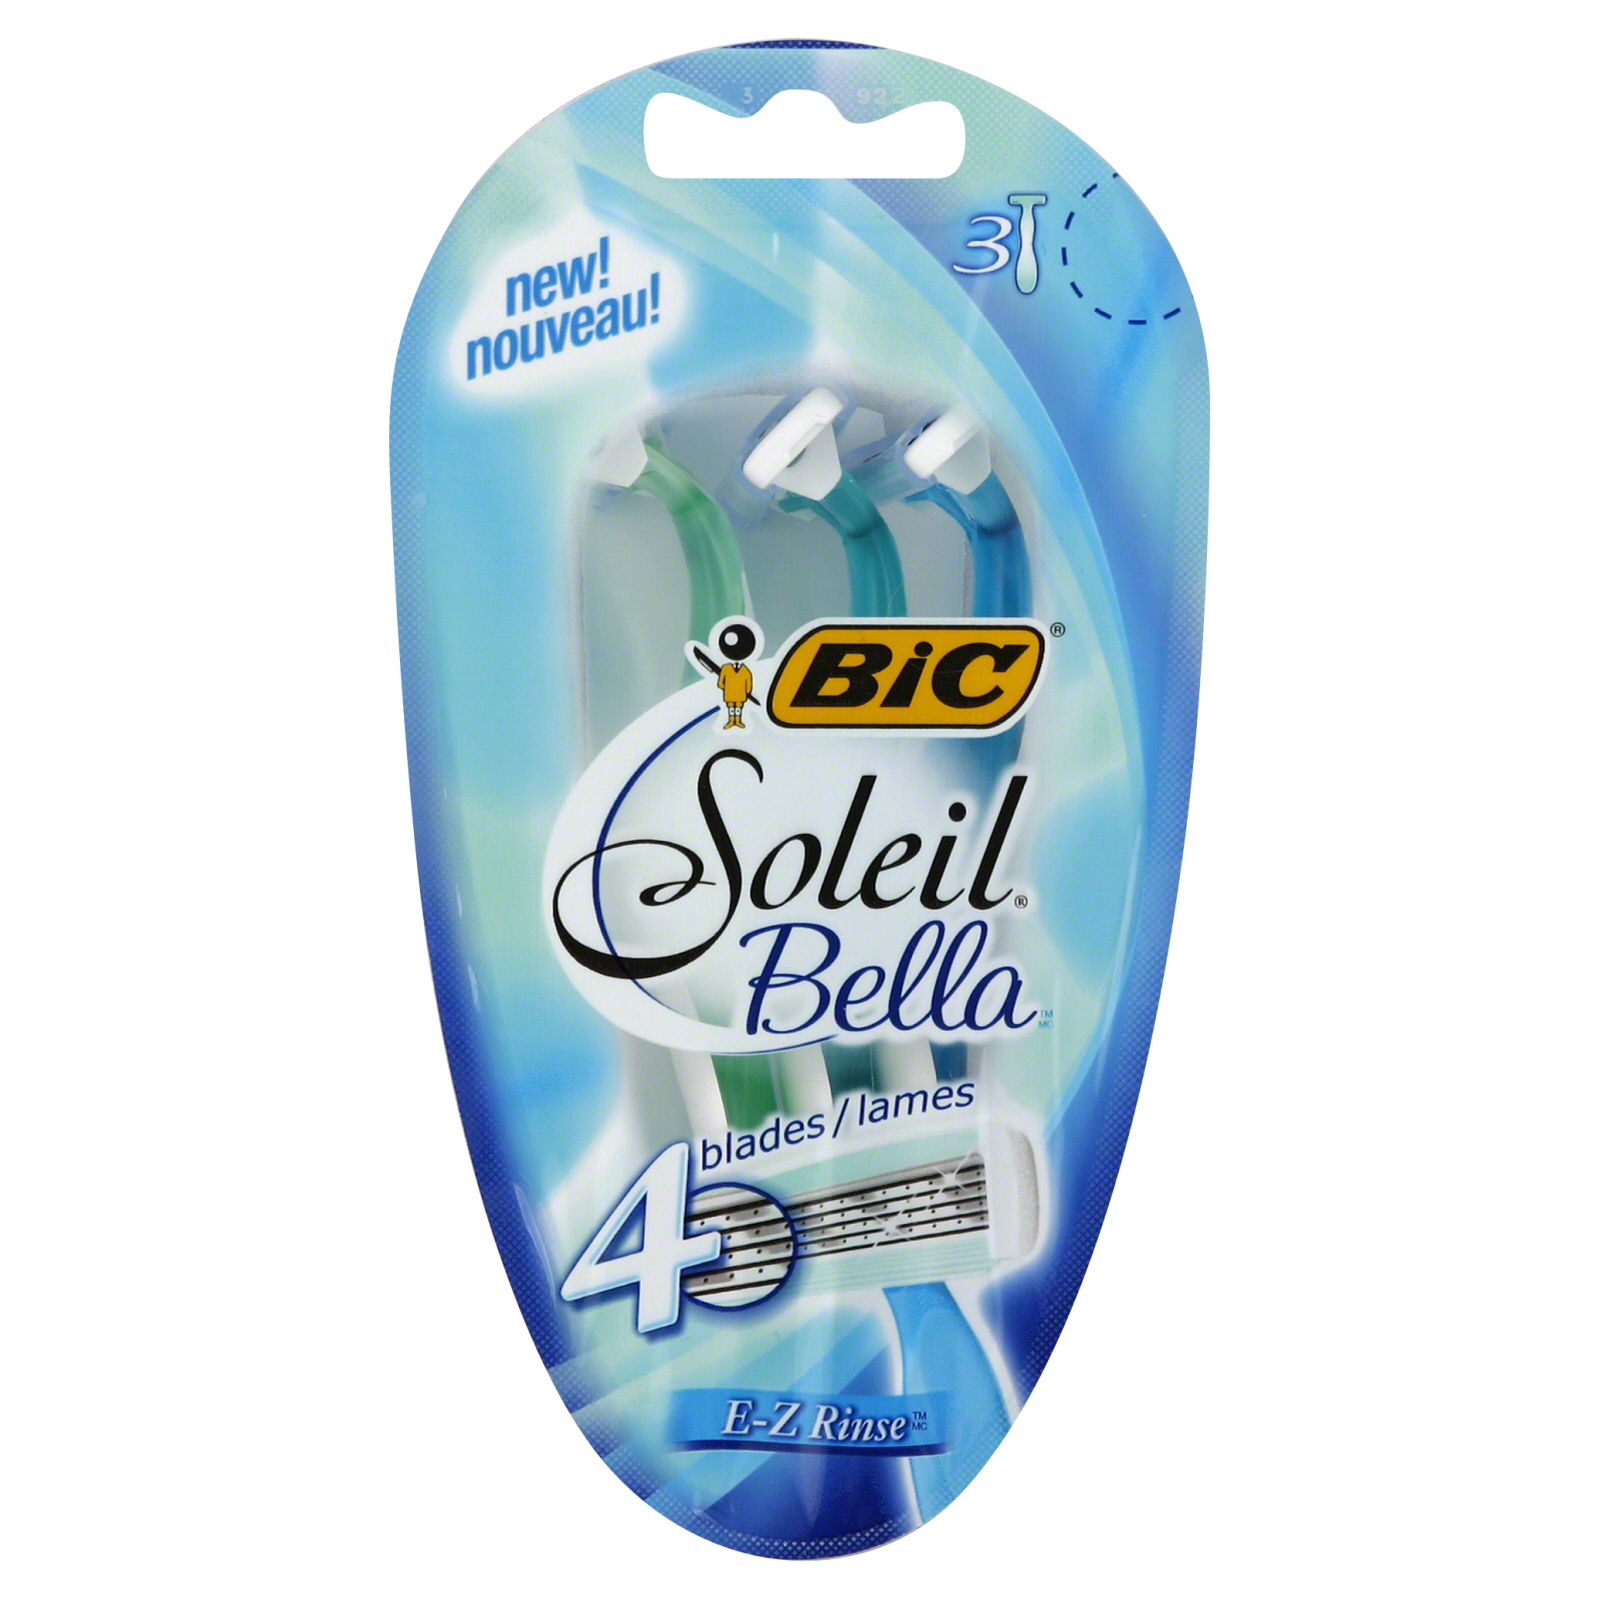 BIC Soleil Bella Shavers, 3 Count